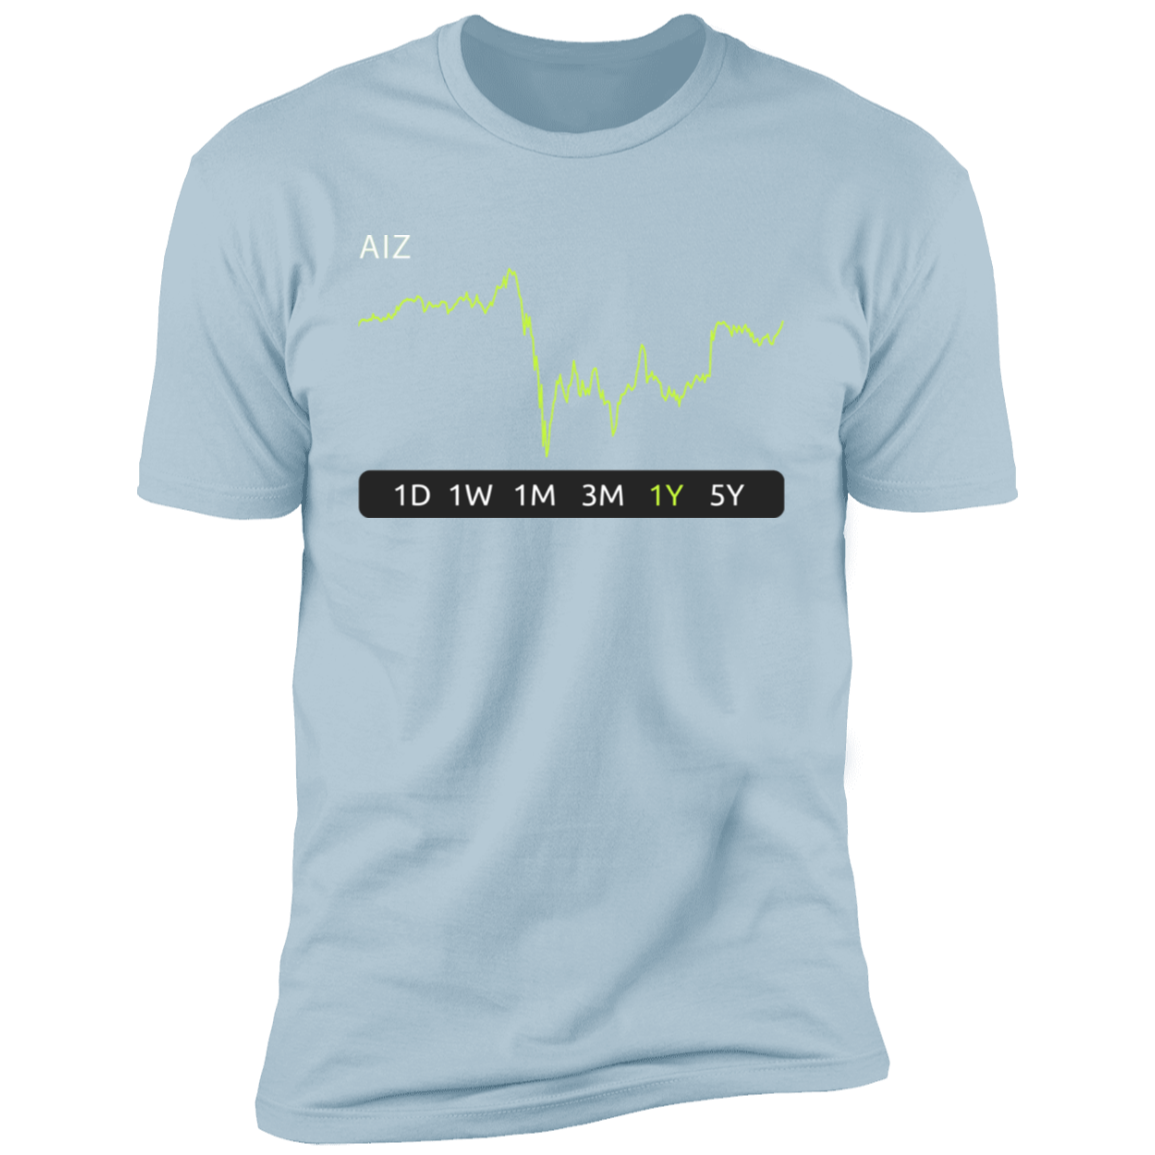 AIZ Stock 1y Premium T-Shirt